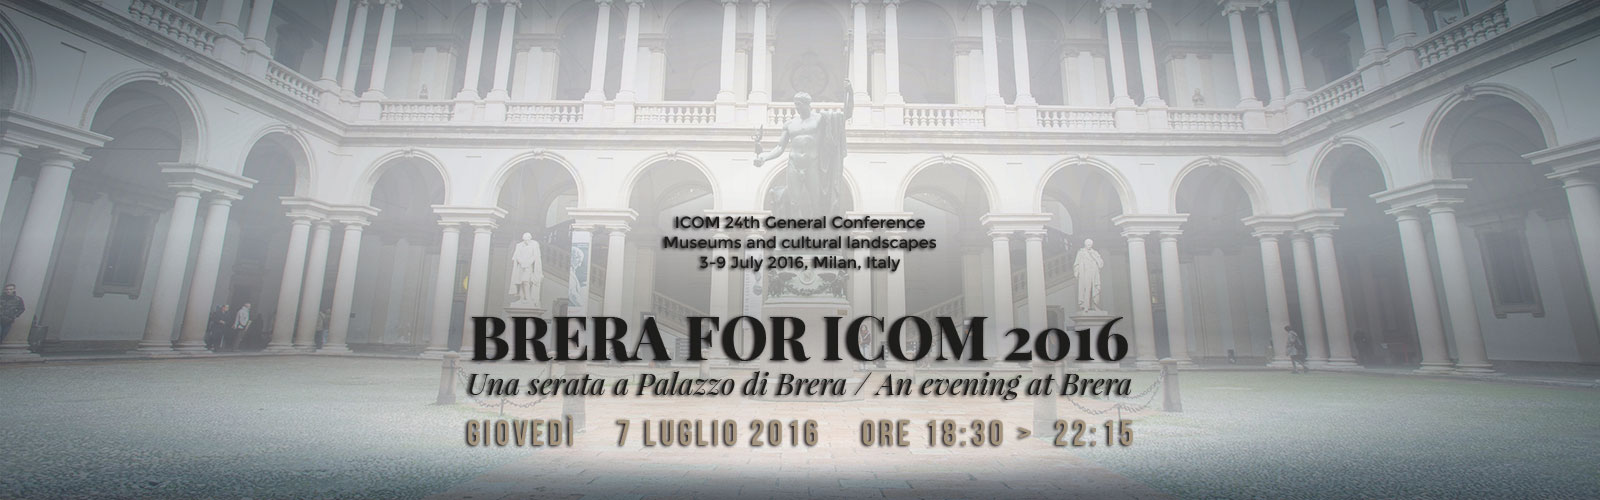 Brera and ICOM International Council of Museums Italia